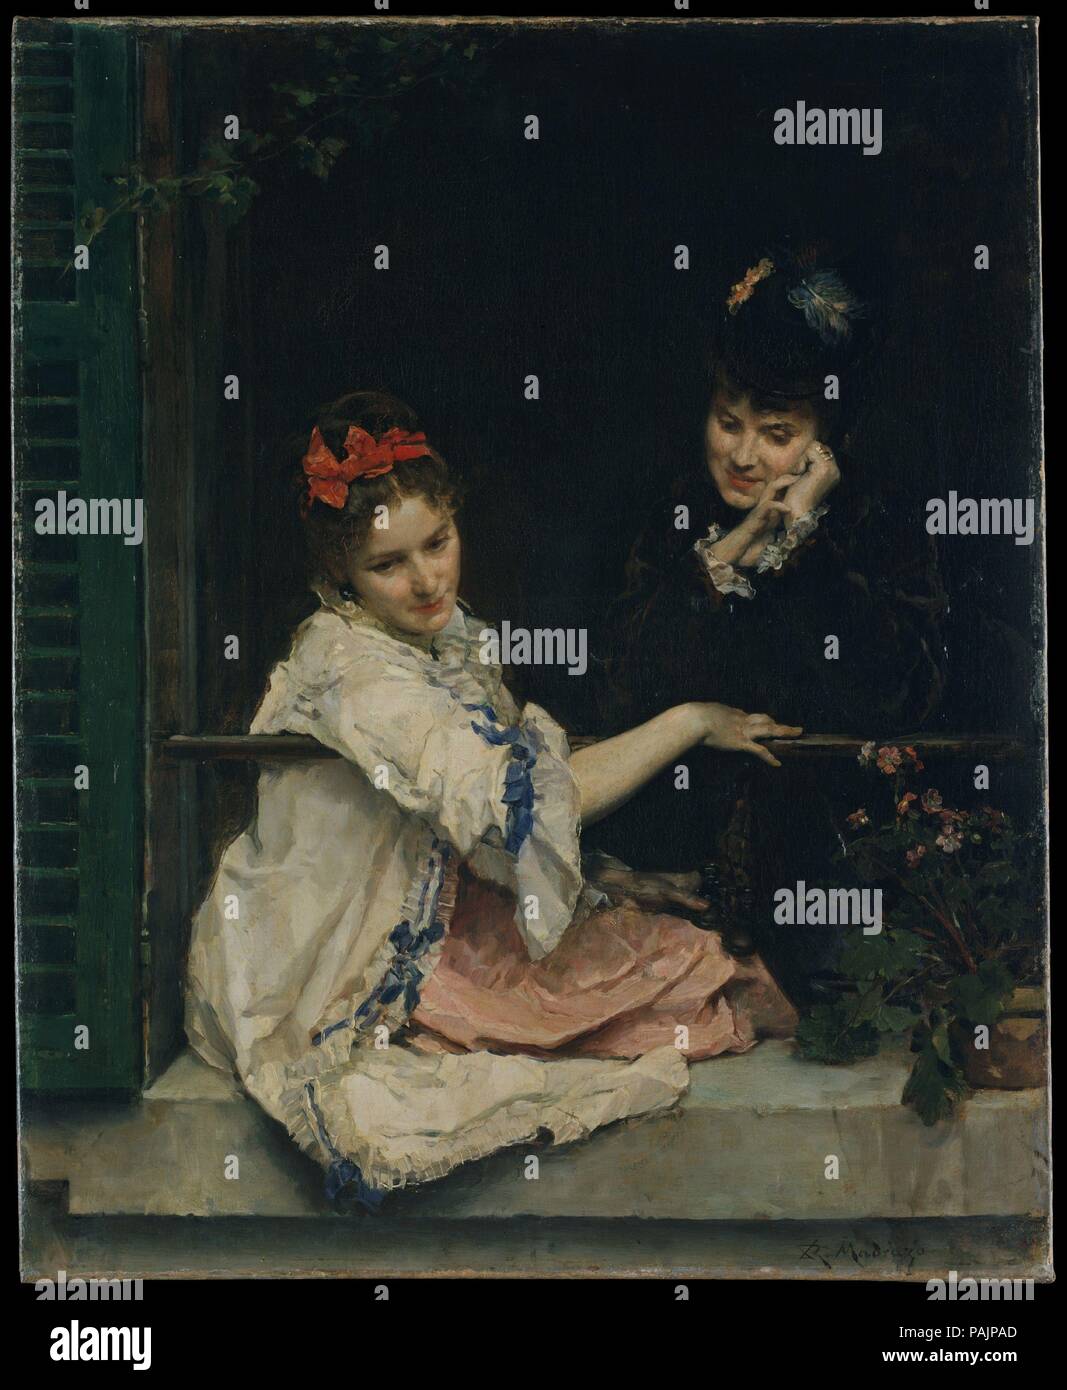 Girls at a Window. Artist: Raimundo de Madrazo y Garreta (Spanish, Rome 1841-1920 Versailles). Dimensions: 28 5/8 x 23 1/2 in. (72.7 x 59.7 cm). Date: ca. 1875. Museum: Metropolitan Museum of Art, New York, USA. Stock Photo